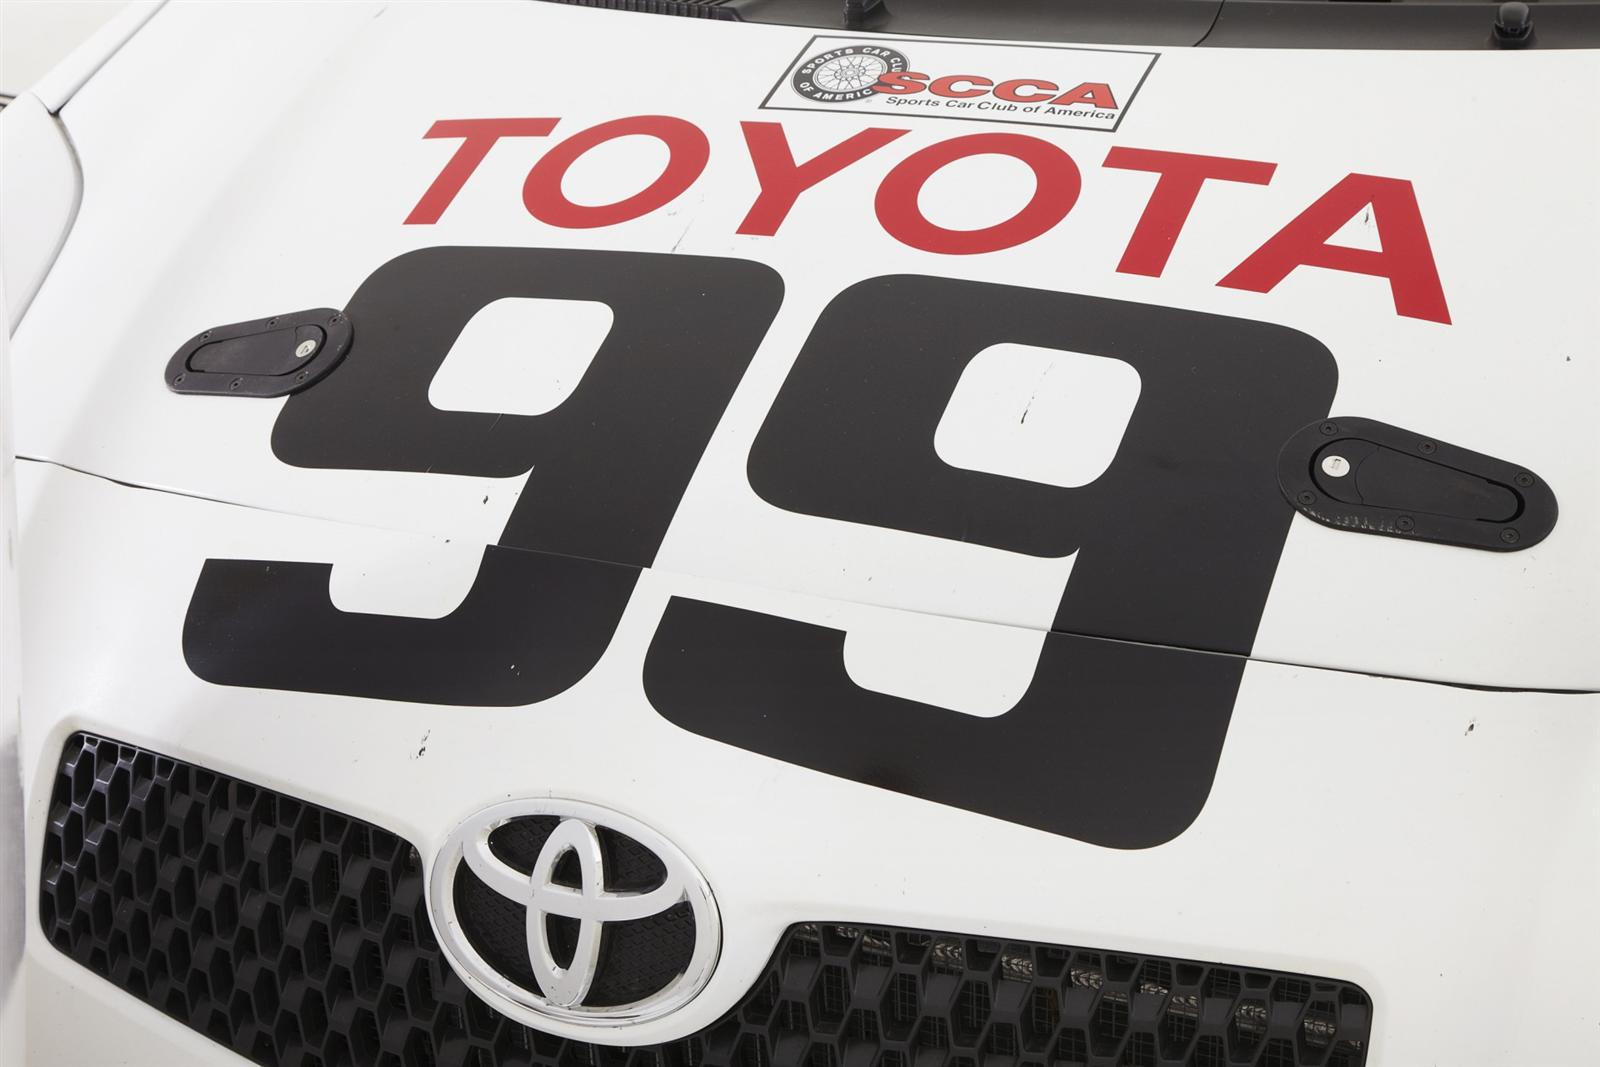 2011 Toyota Yaris GT-S Club Racer